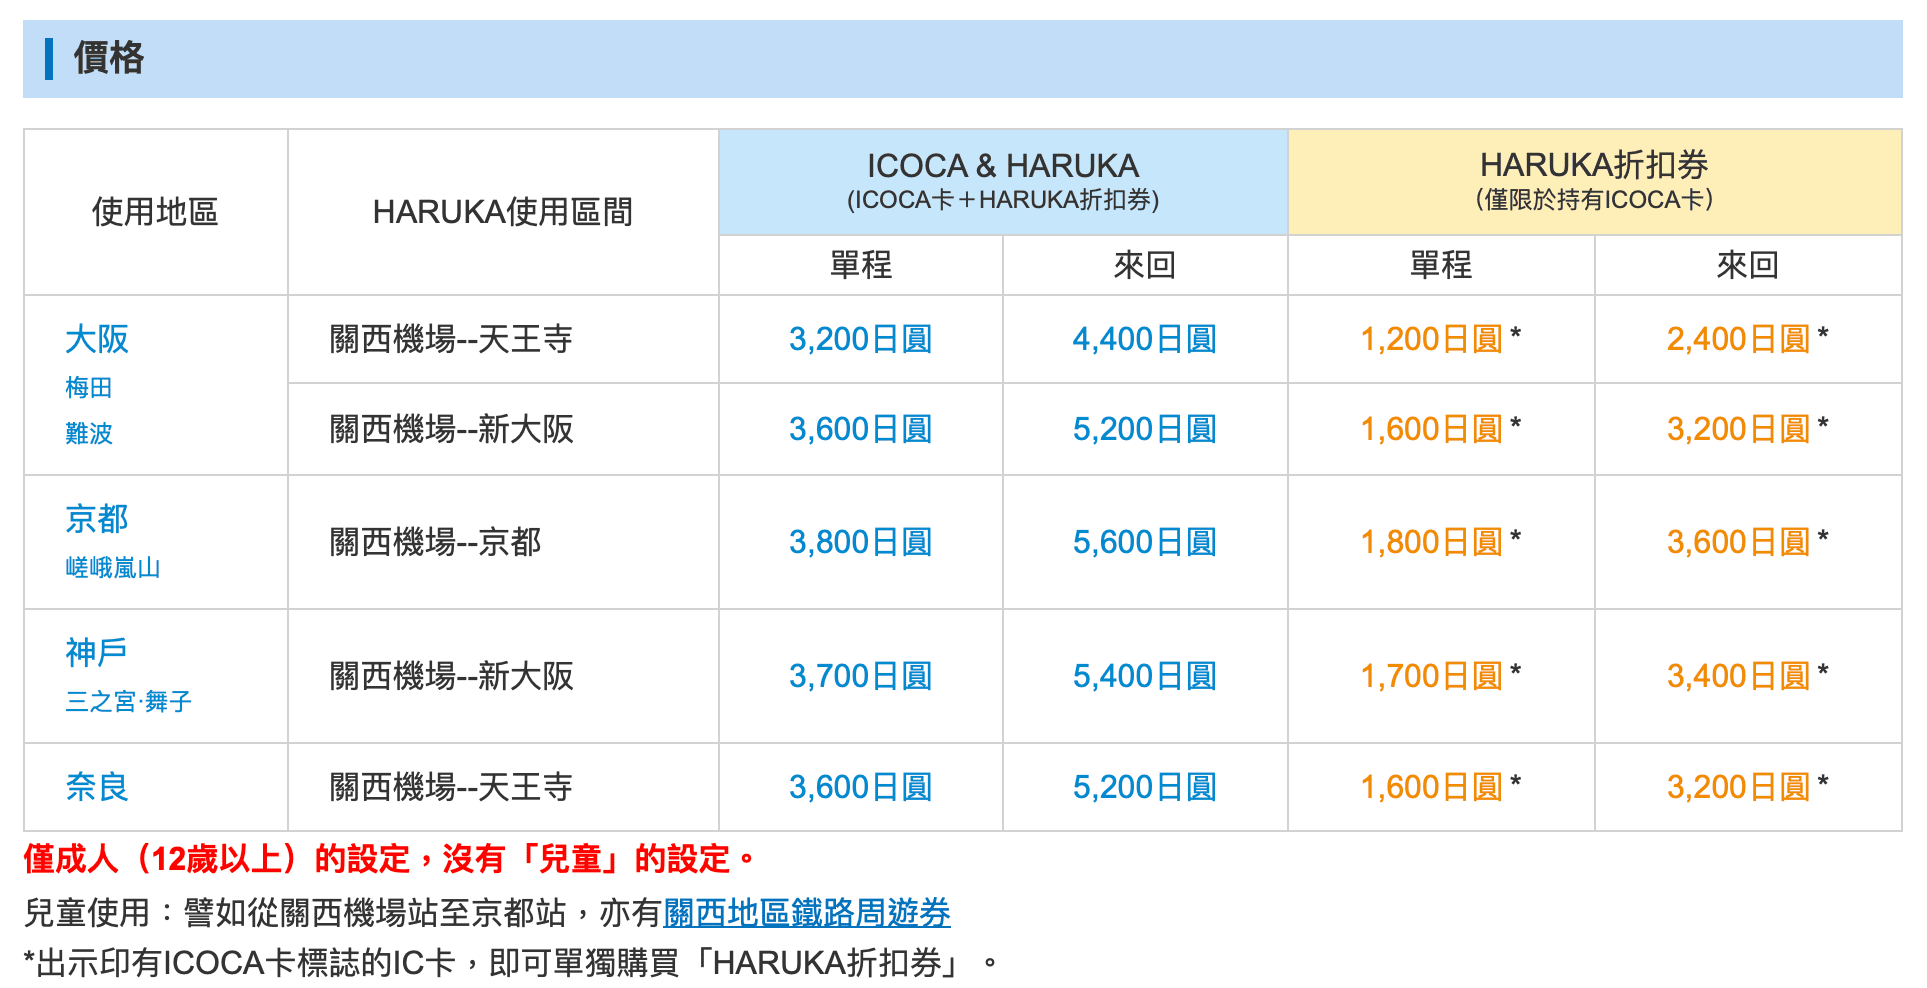 ICOCA＆HARUKA票價資訊 Price information